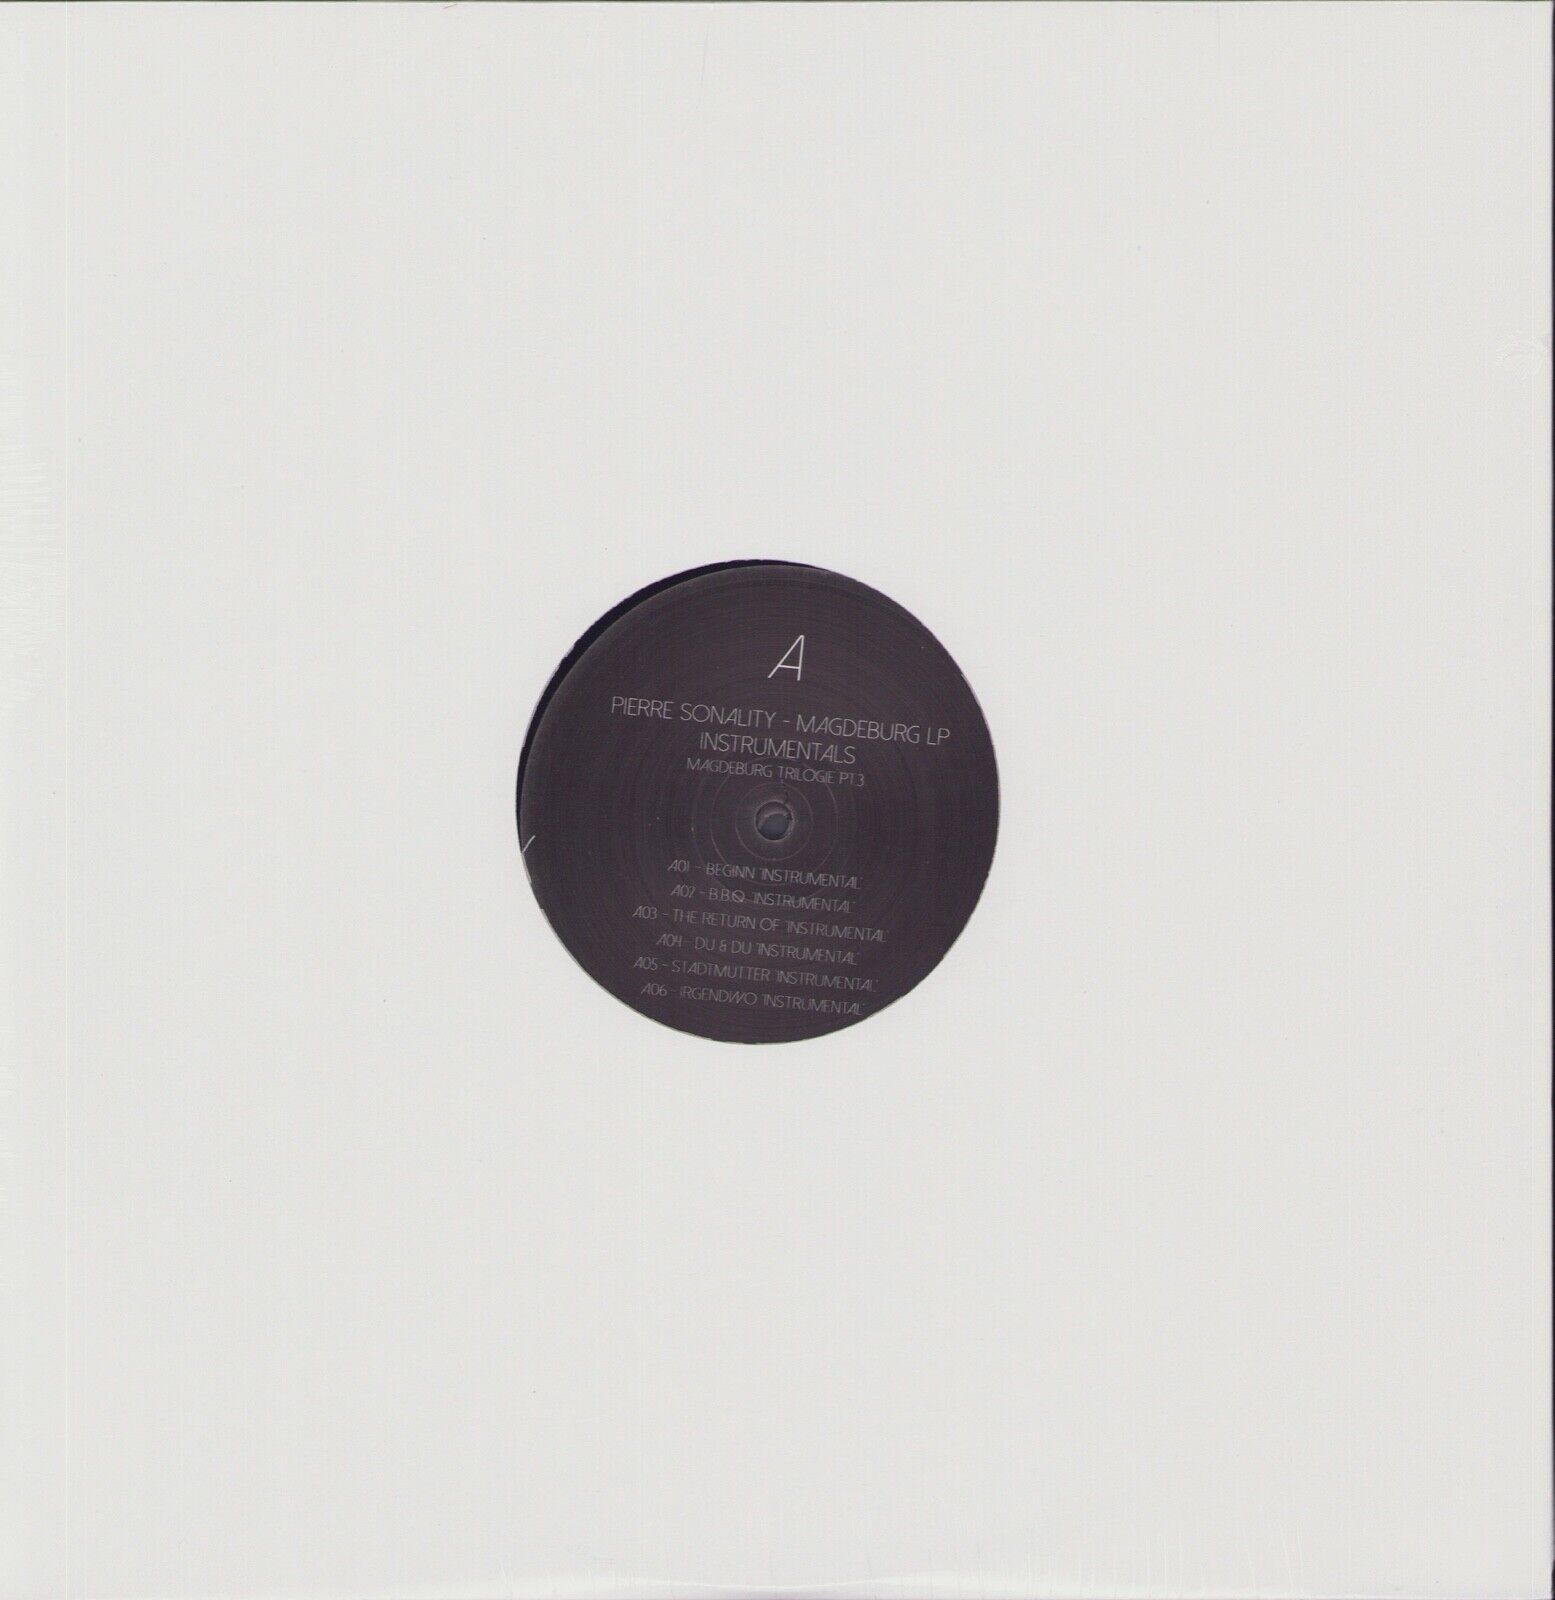 Pierre Sonality - Magdeburg Instrumentals Vinyl 2LP